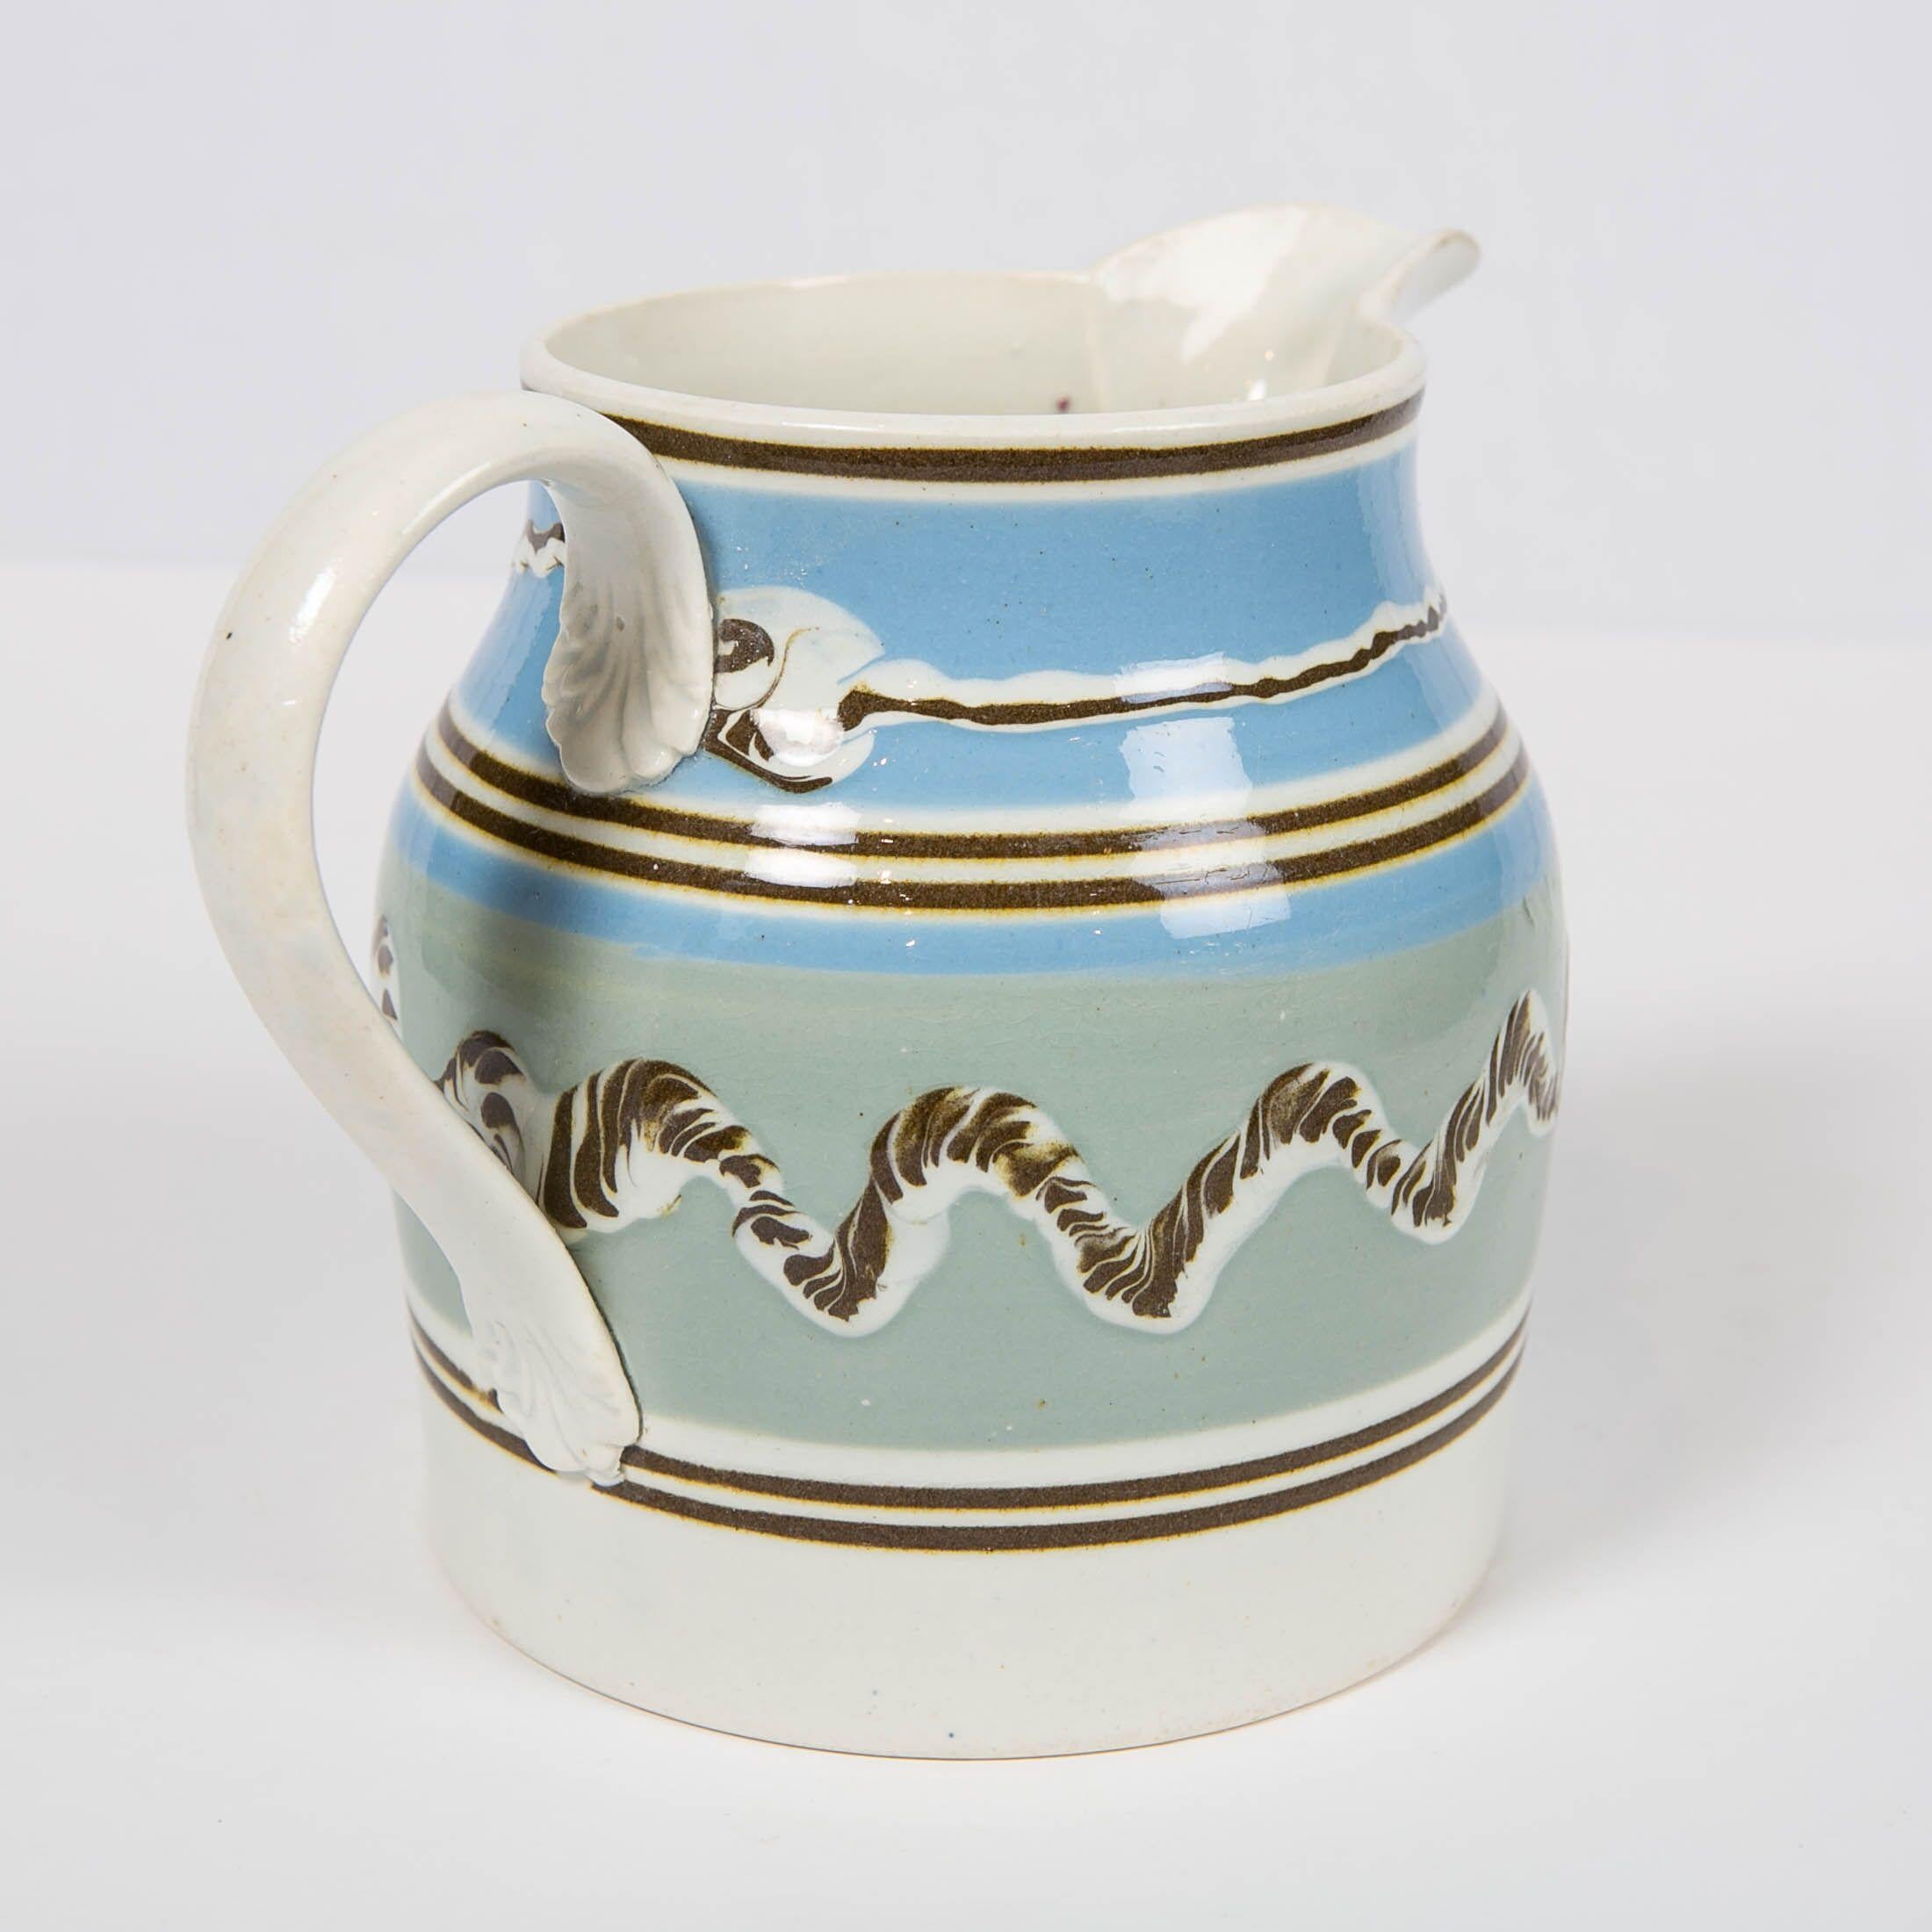 19th Century Mochaware Pitcher Made of Pearl-Glazed Creamware in England, circa 1820